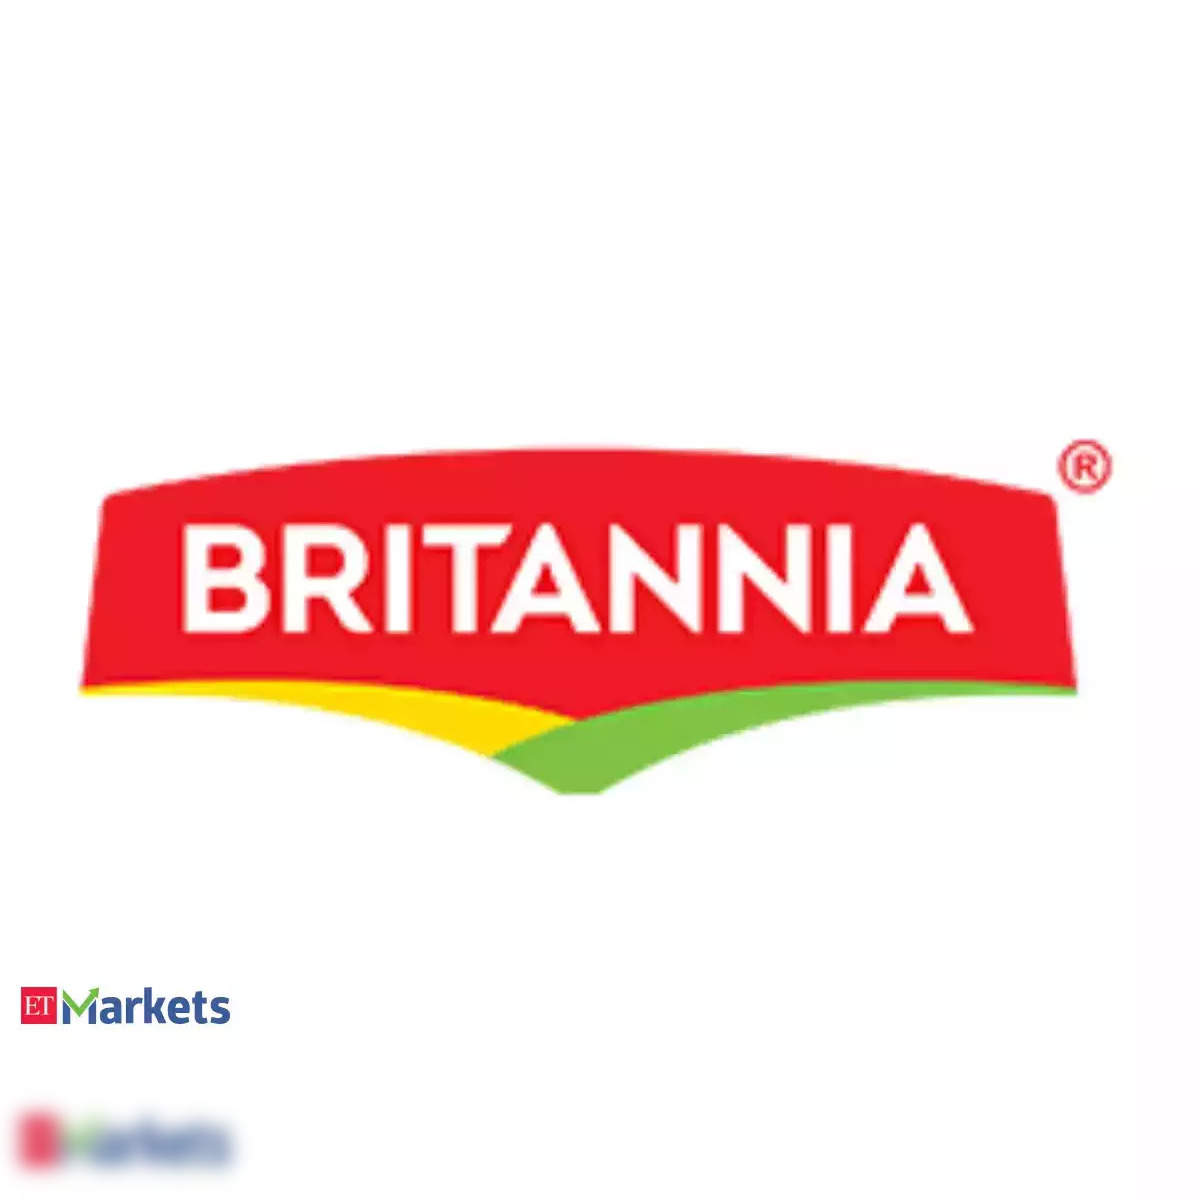 Bank of England refreshes its Britannia logo